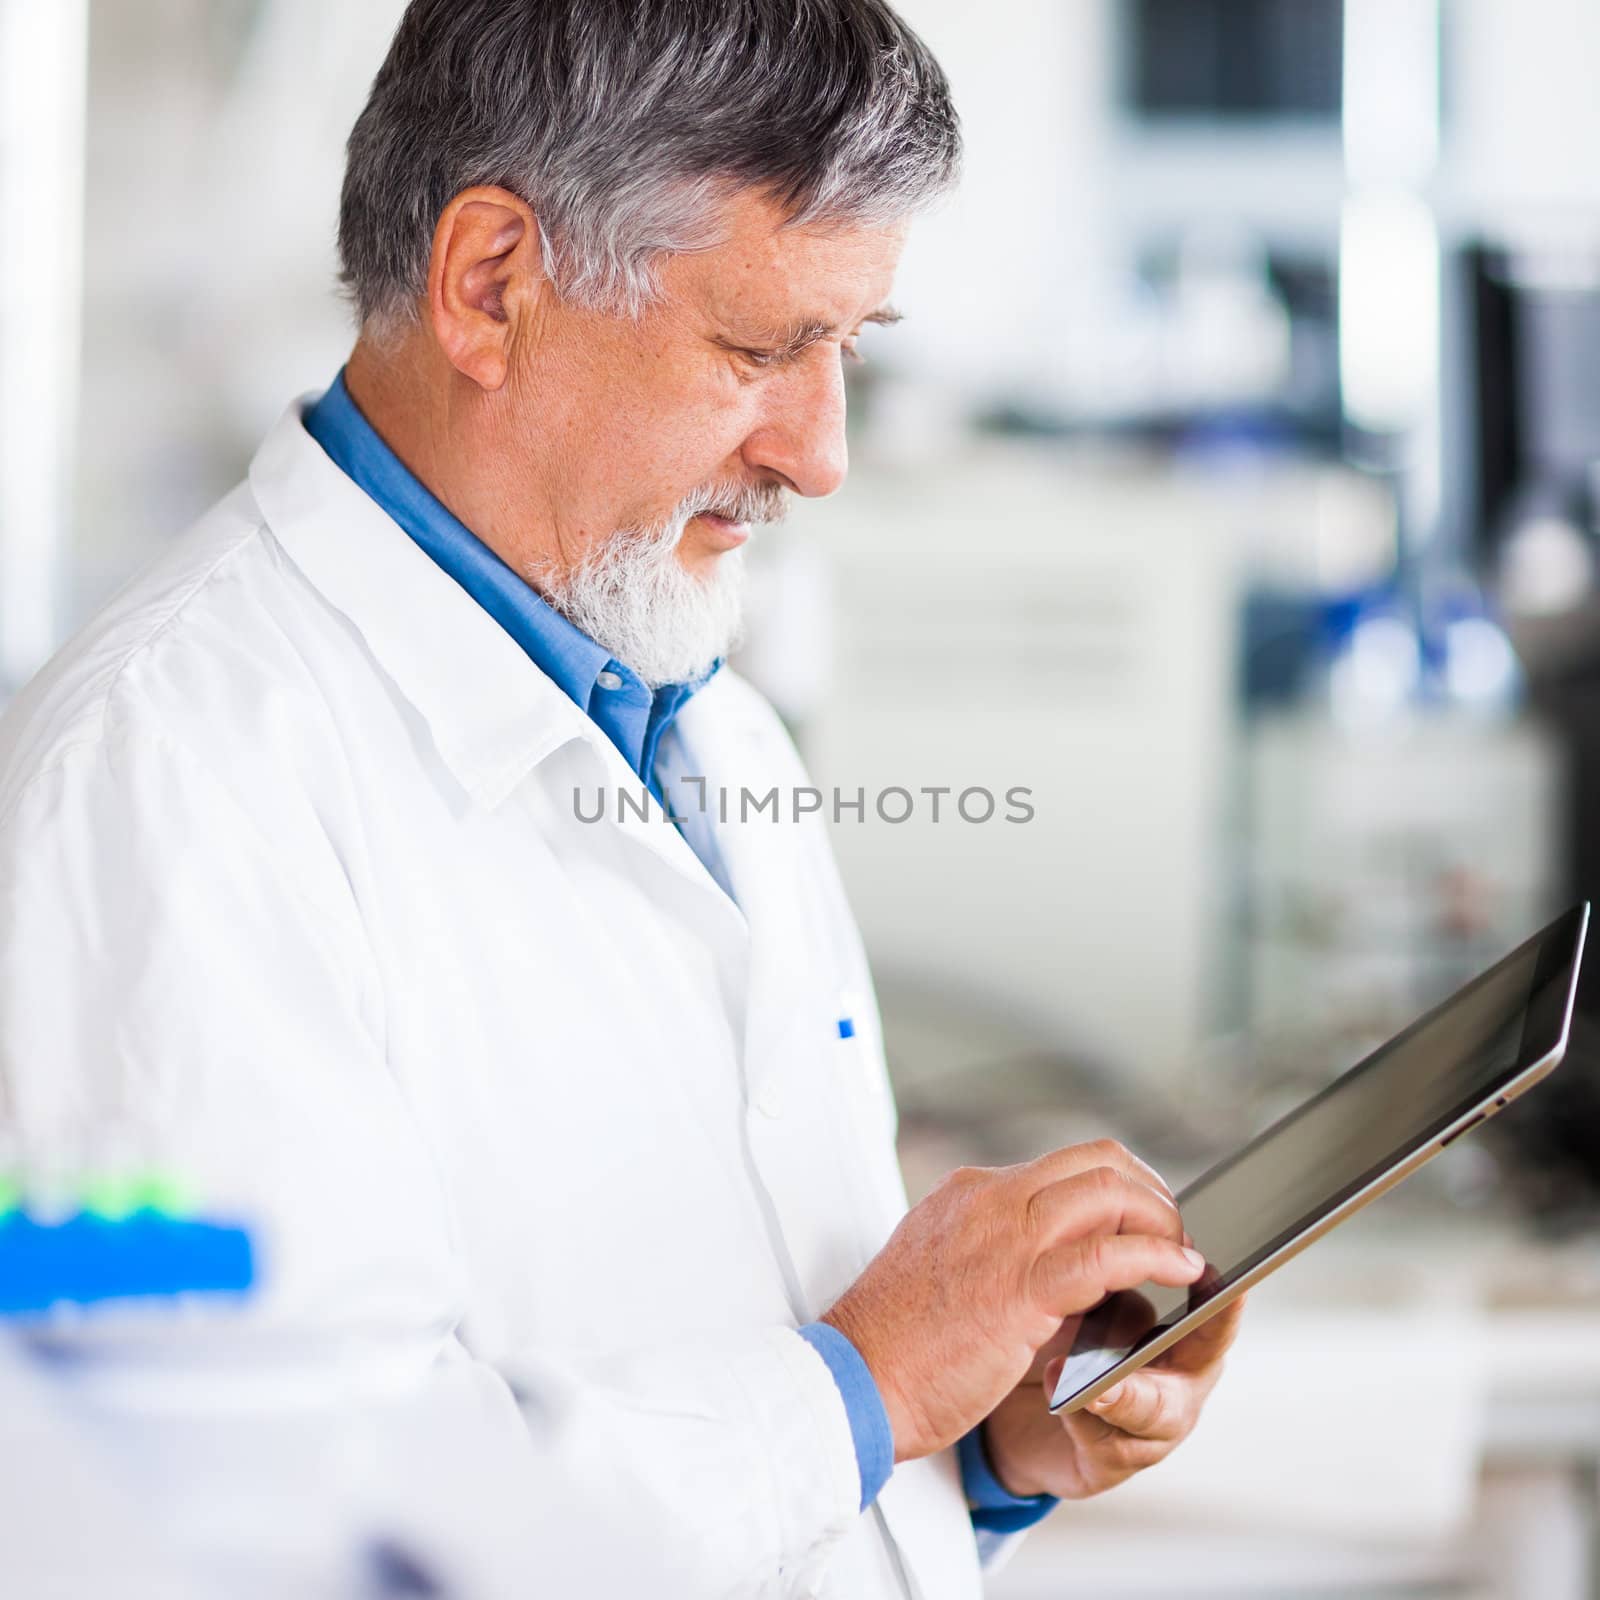 Senior doctor/scientist using his tablet computer at work by viktor_cap